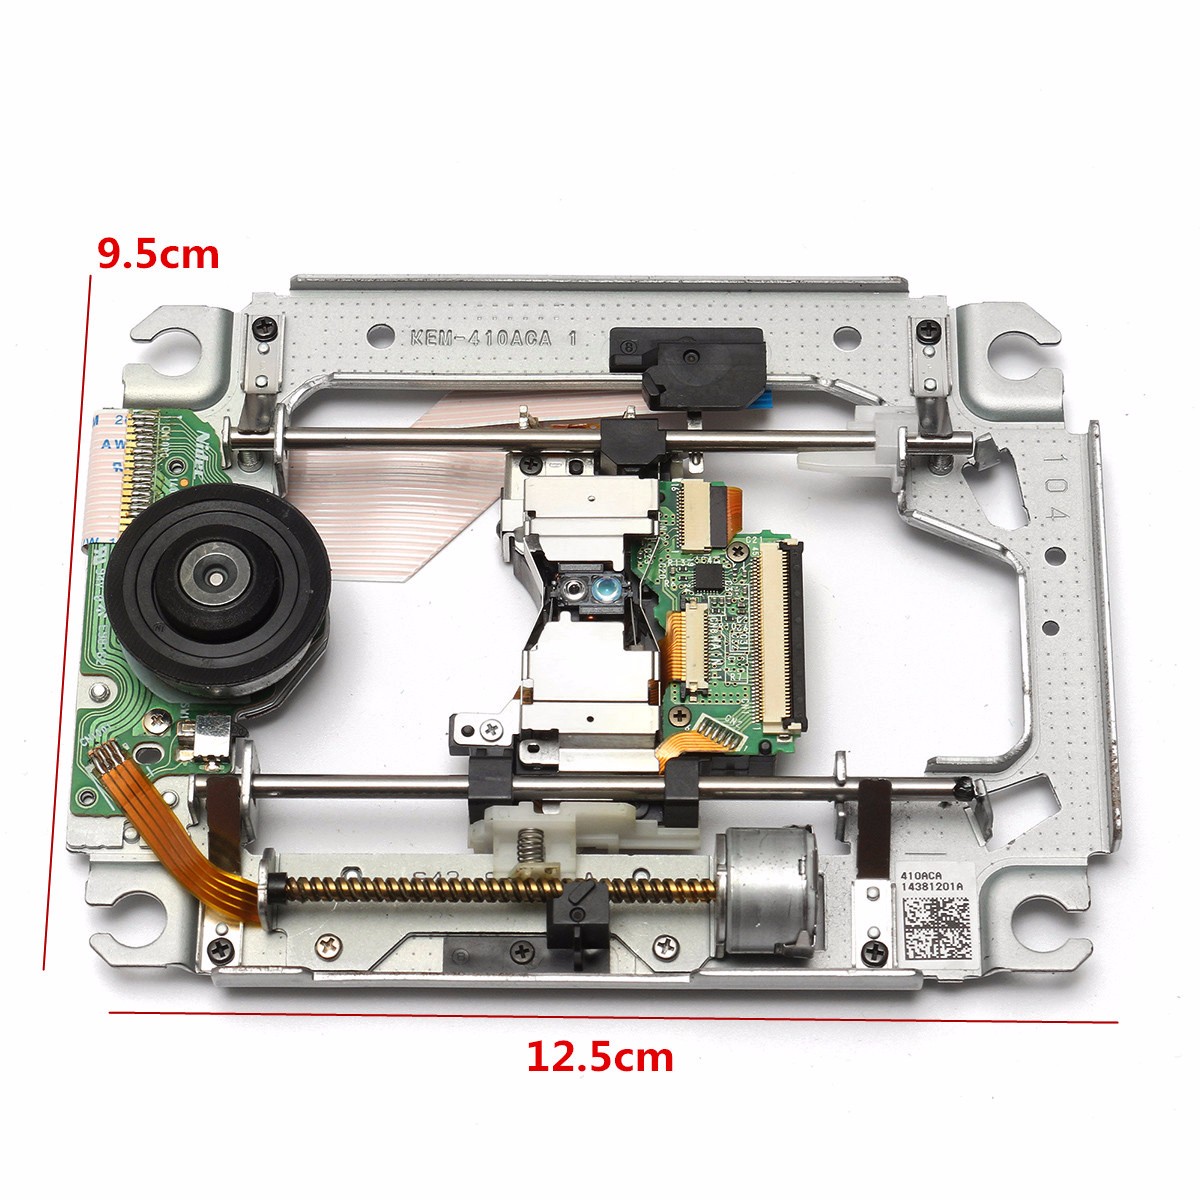 KES-410ACA/410A KEM-410ACA Laser Lens & Deck for Play Station 3 for PS3 Parts 7